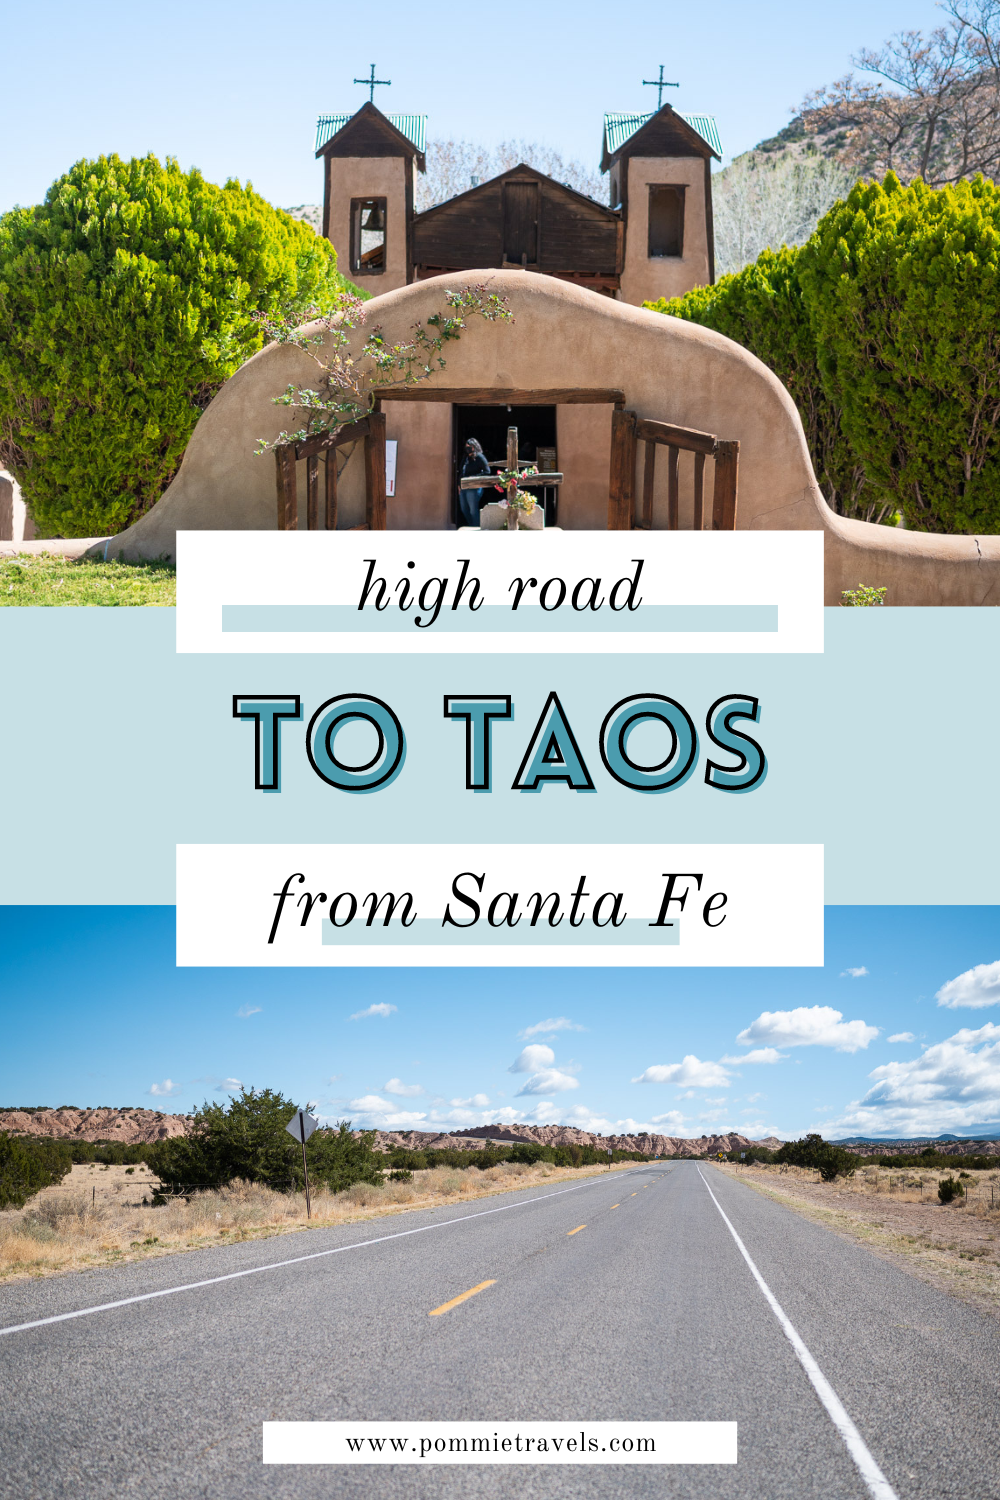 High road to Taos from Santa Fe